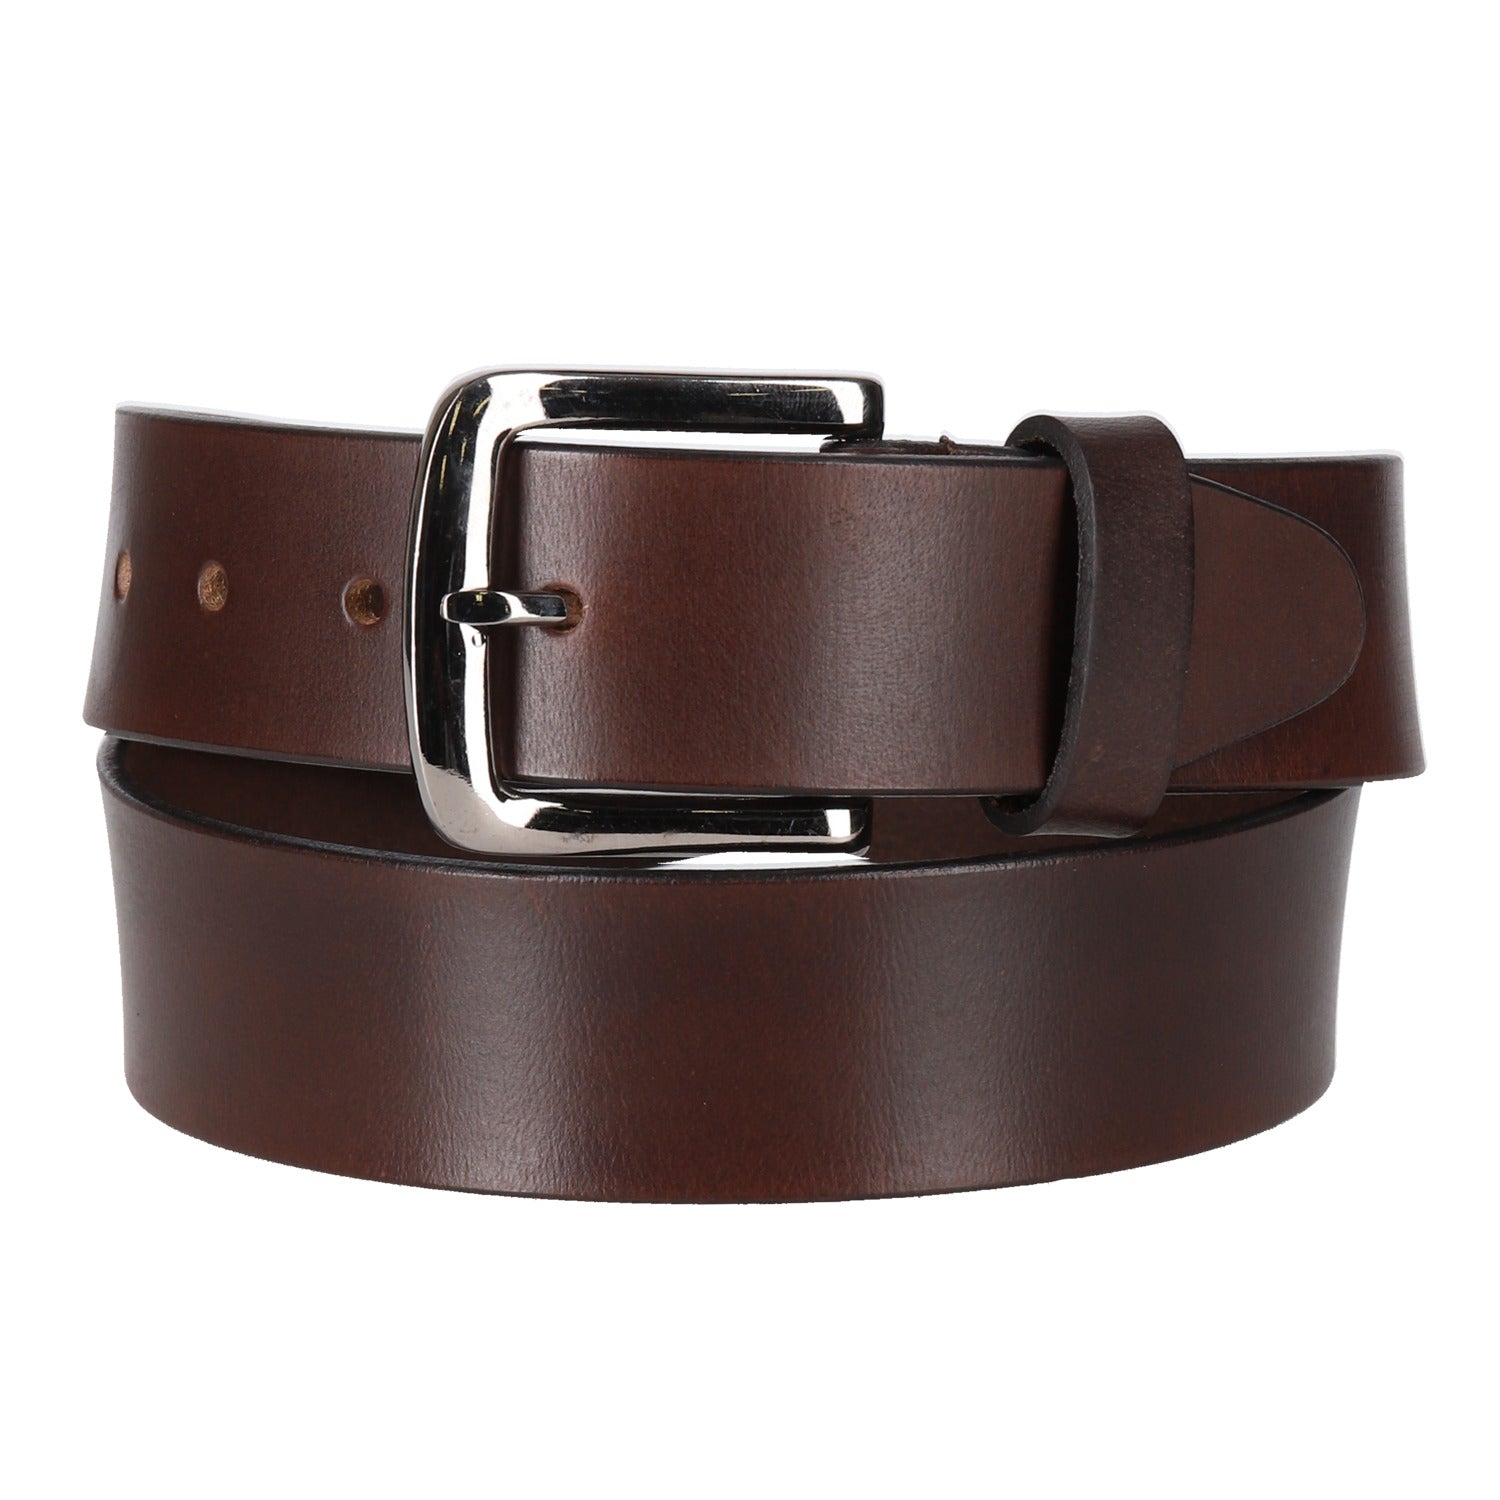 RIDEZ LEATHER BELT Genuine leather belt Brown CB-171 